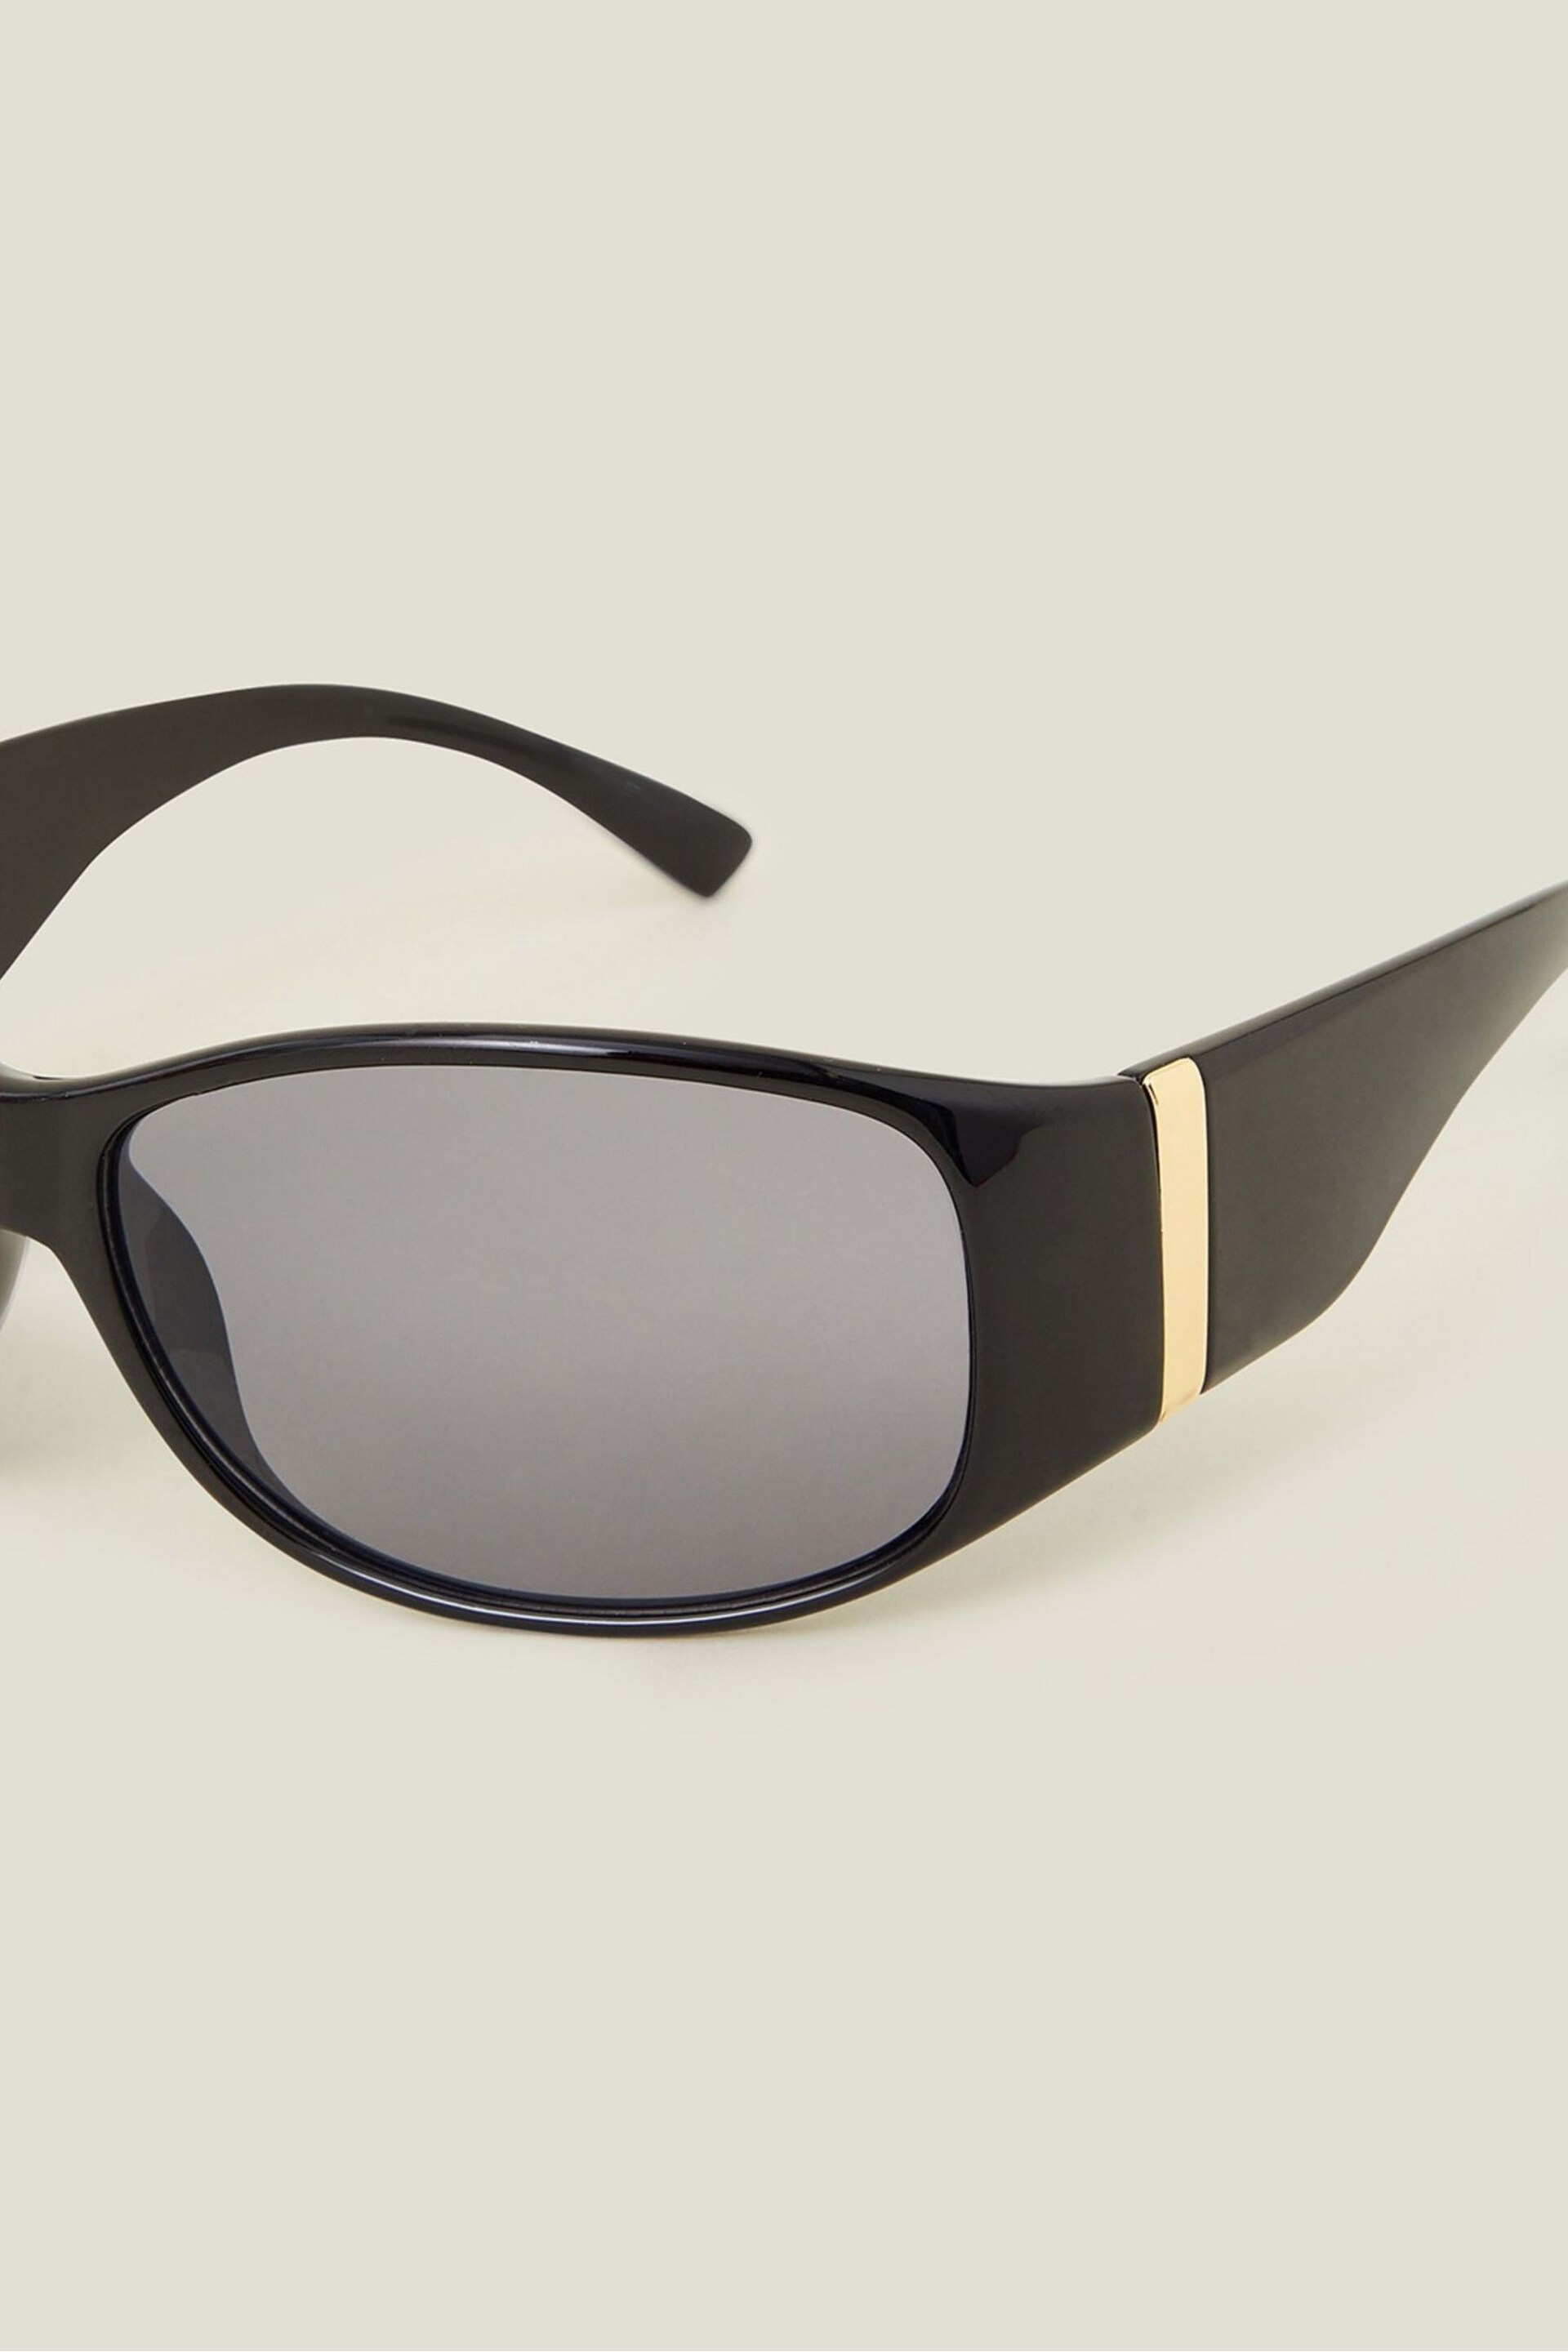 Accessorize Black Wrap Sunglasses - Image 2 of 3